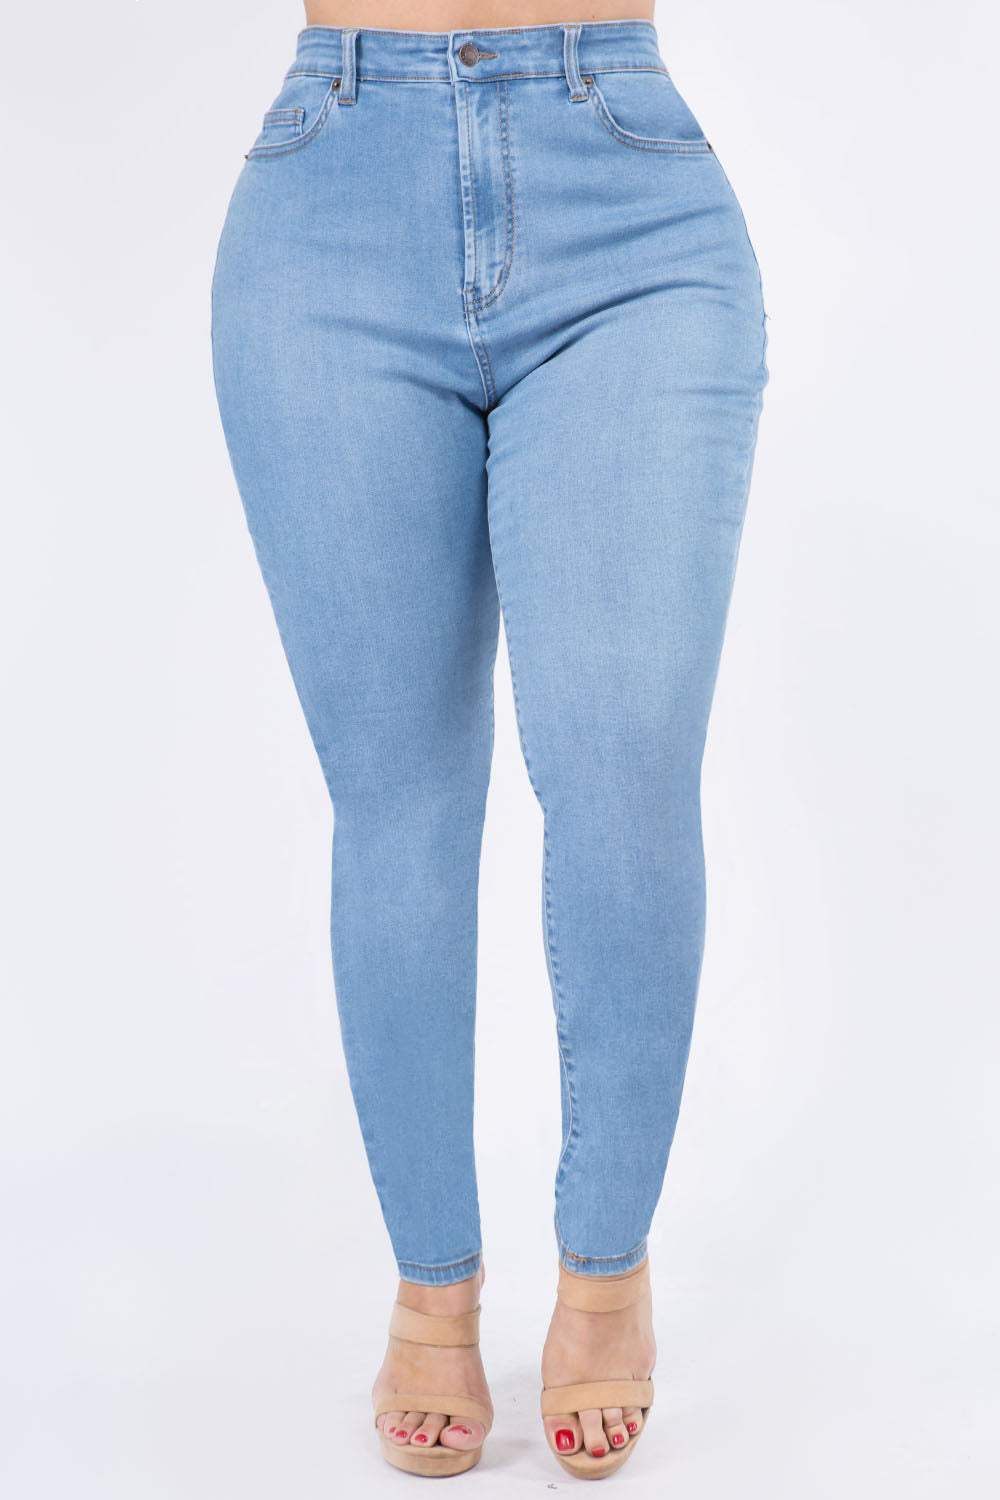 Premium Modal Fabric High Rise Basic Denim Skinny Jeans - Plus Size